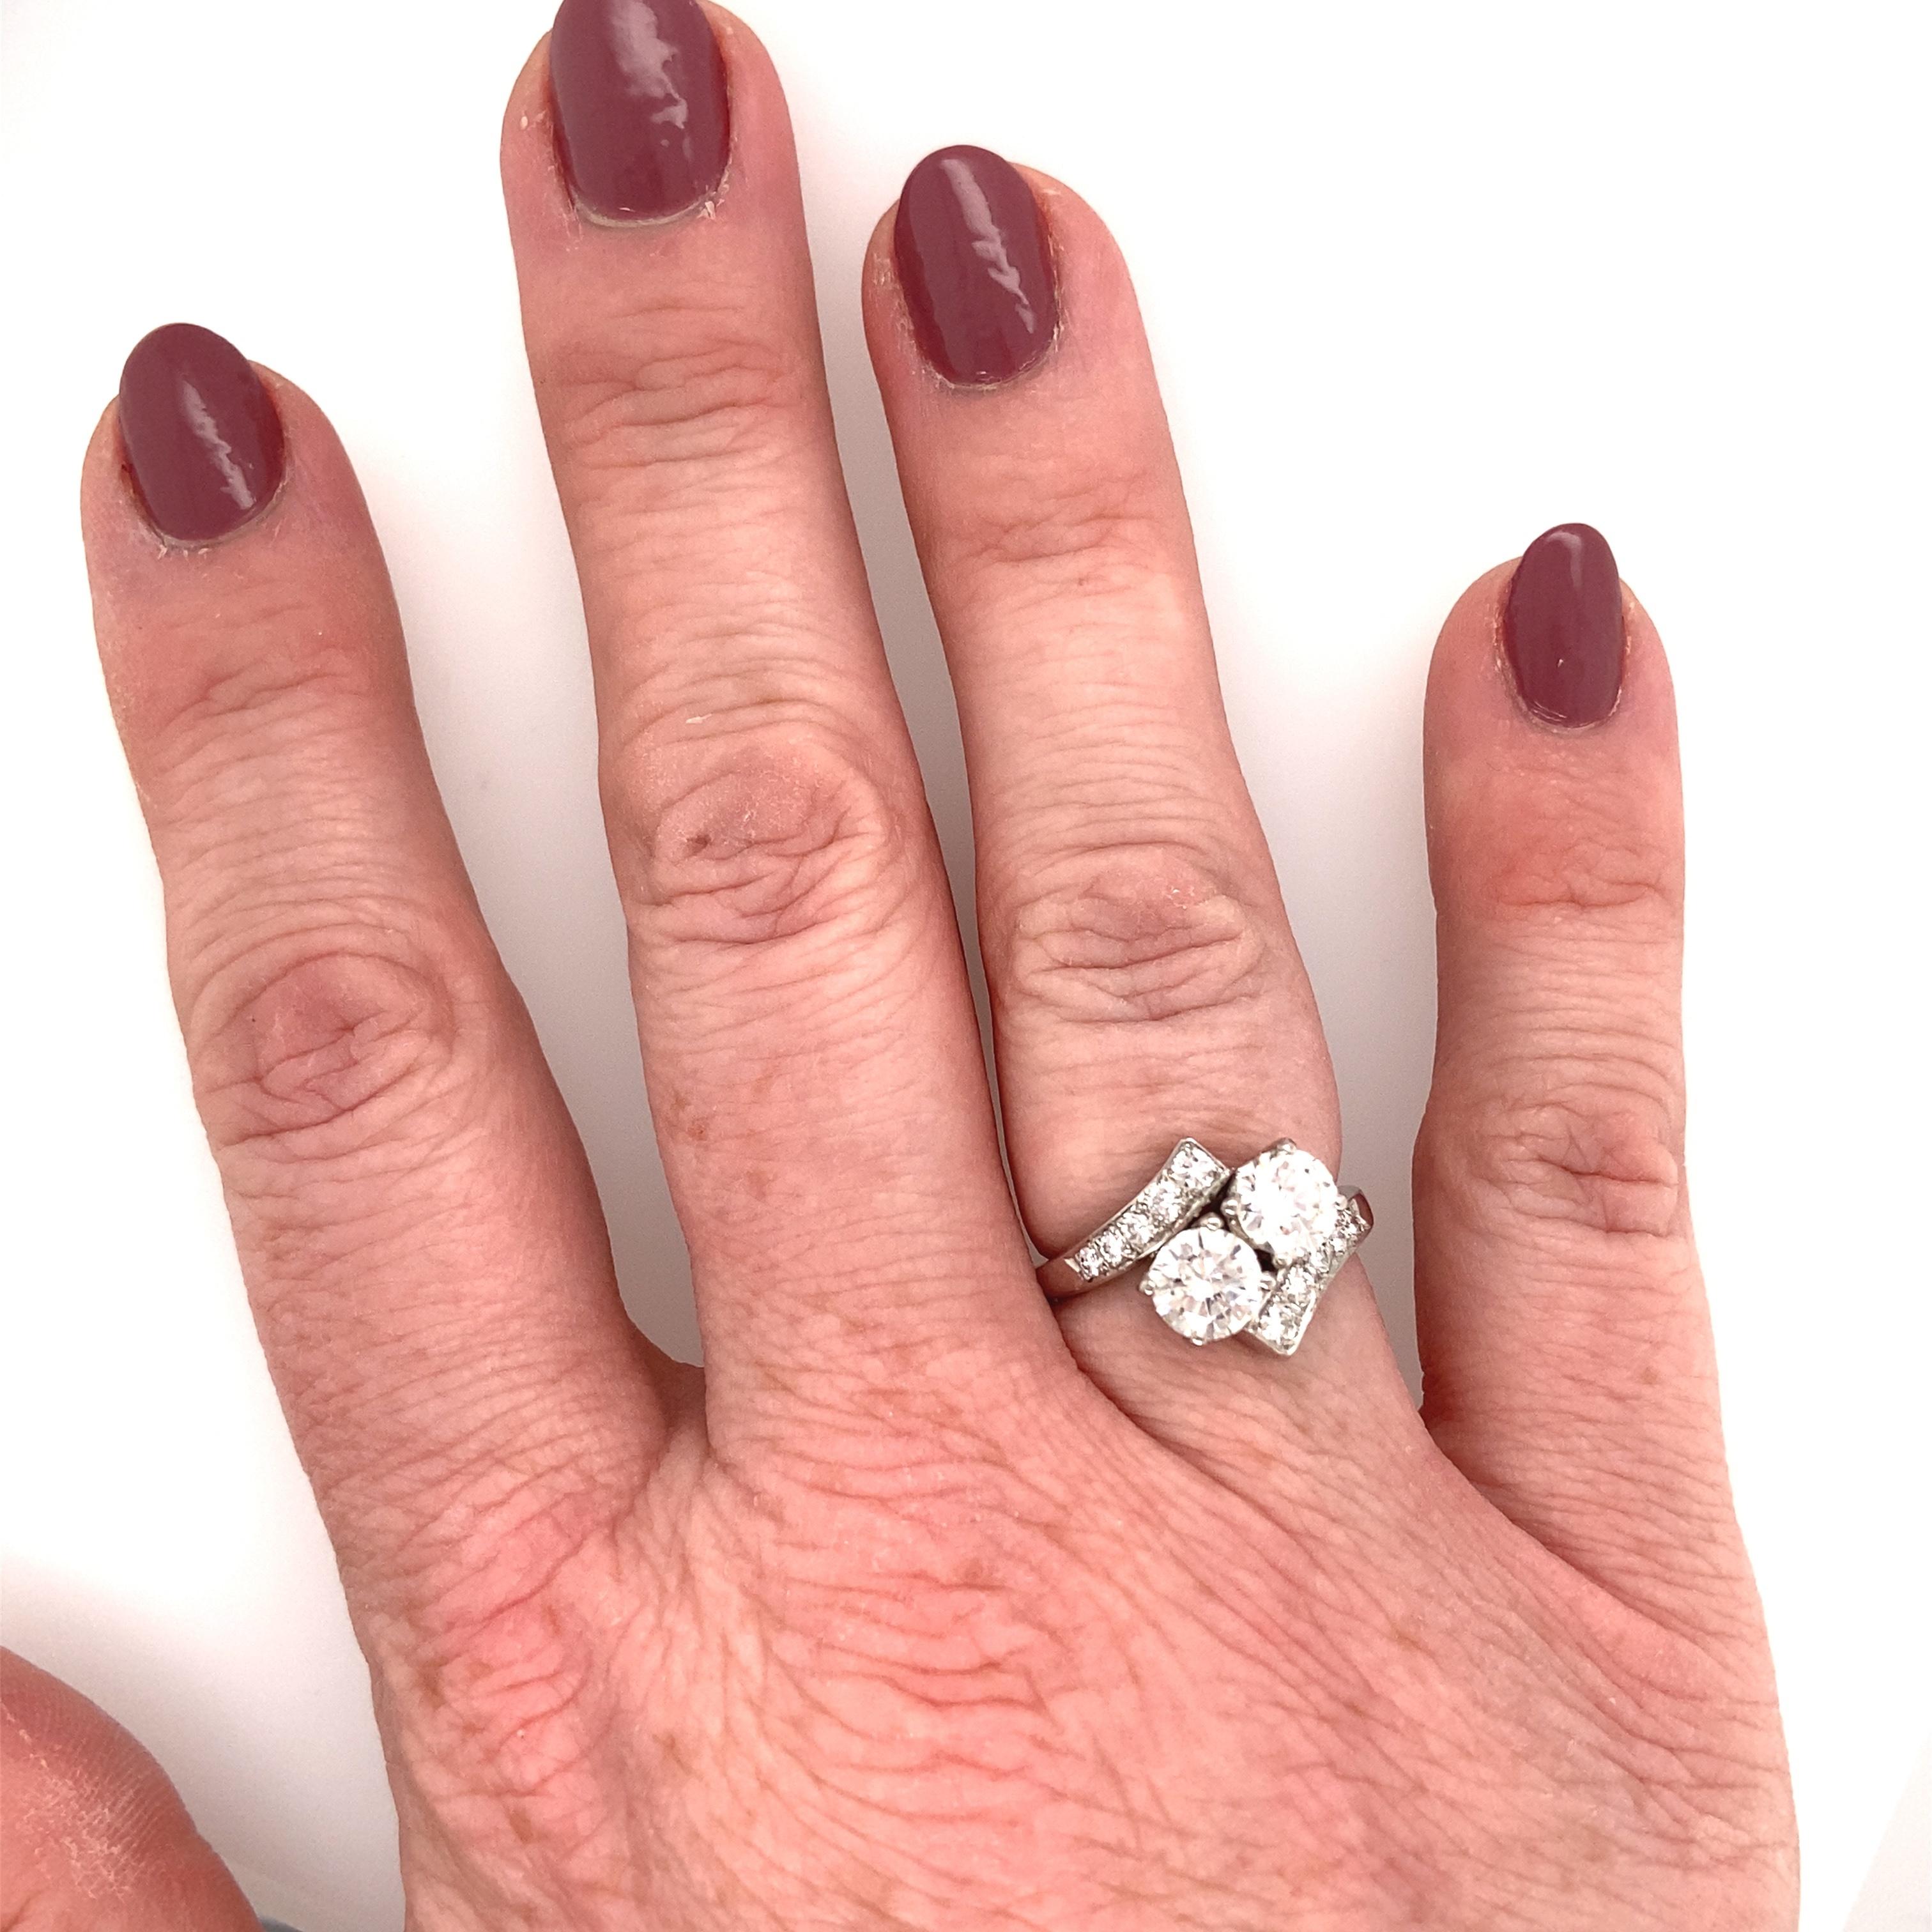 napoleon bonaparte engagement ring